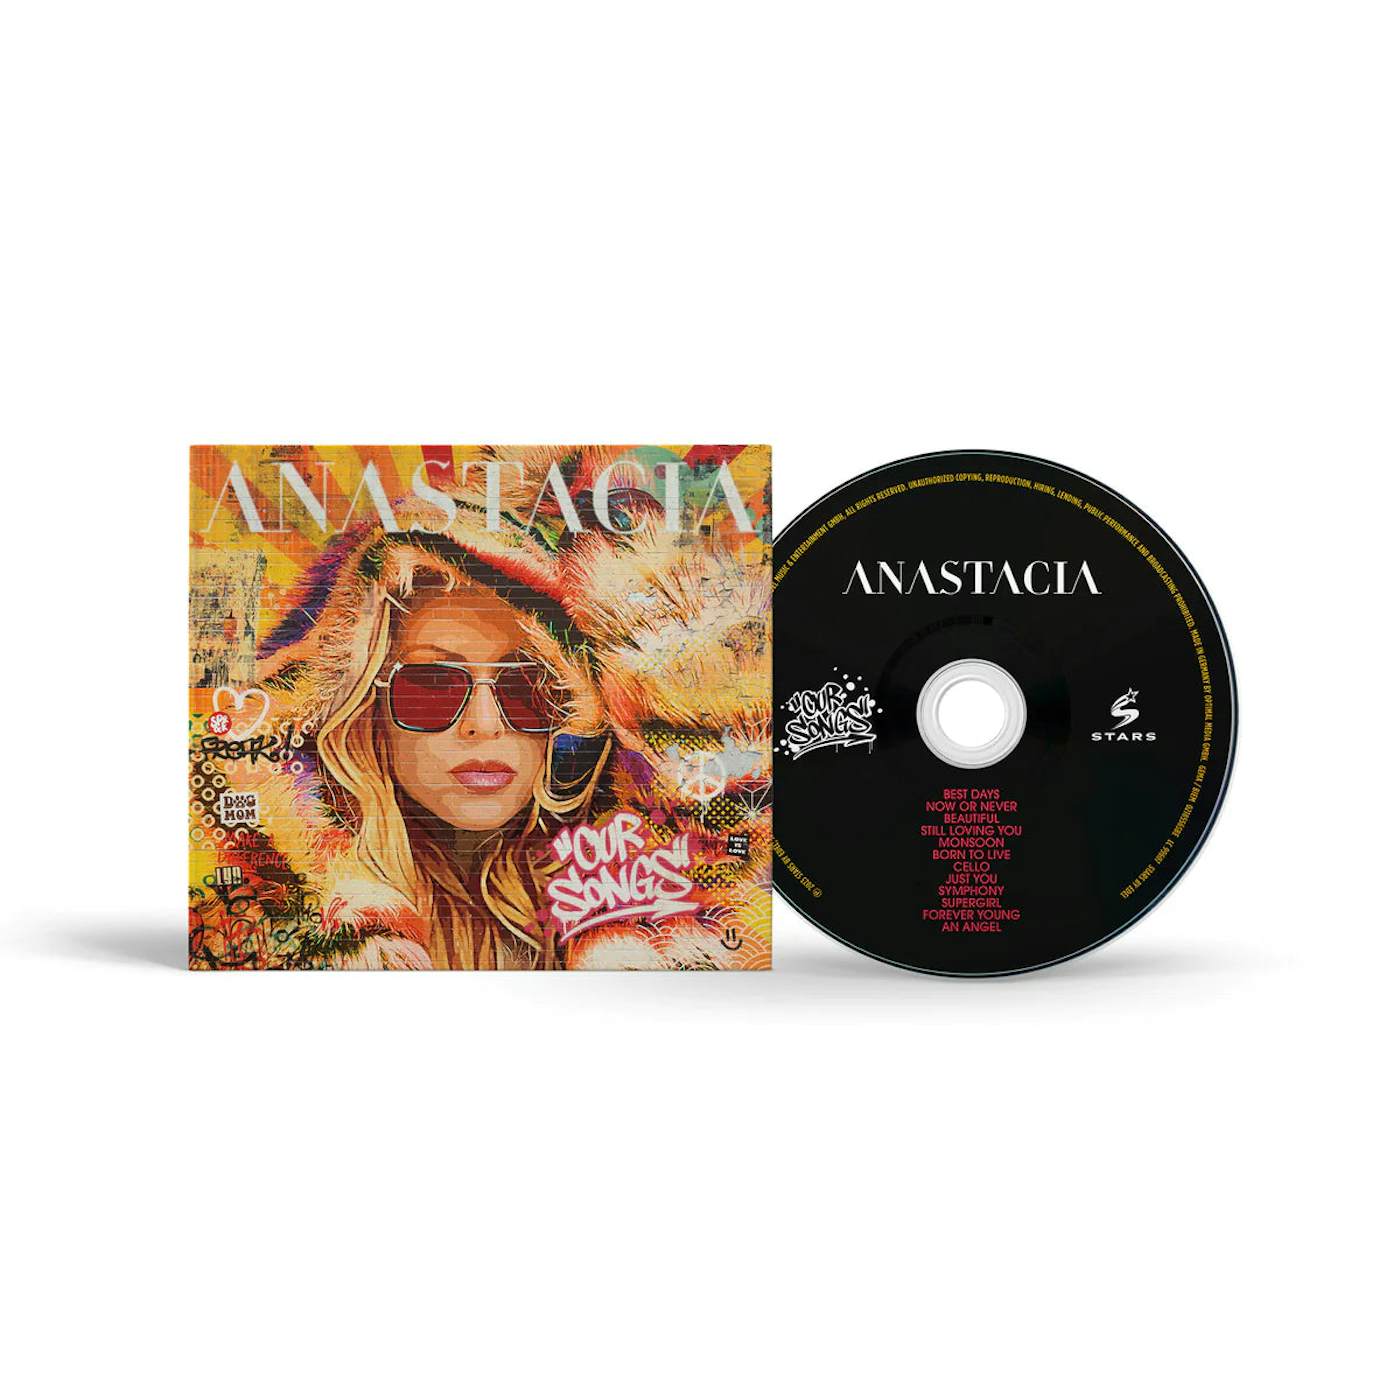 Anastacia CD - Our Songs